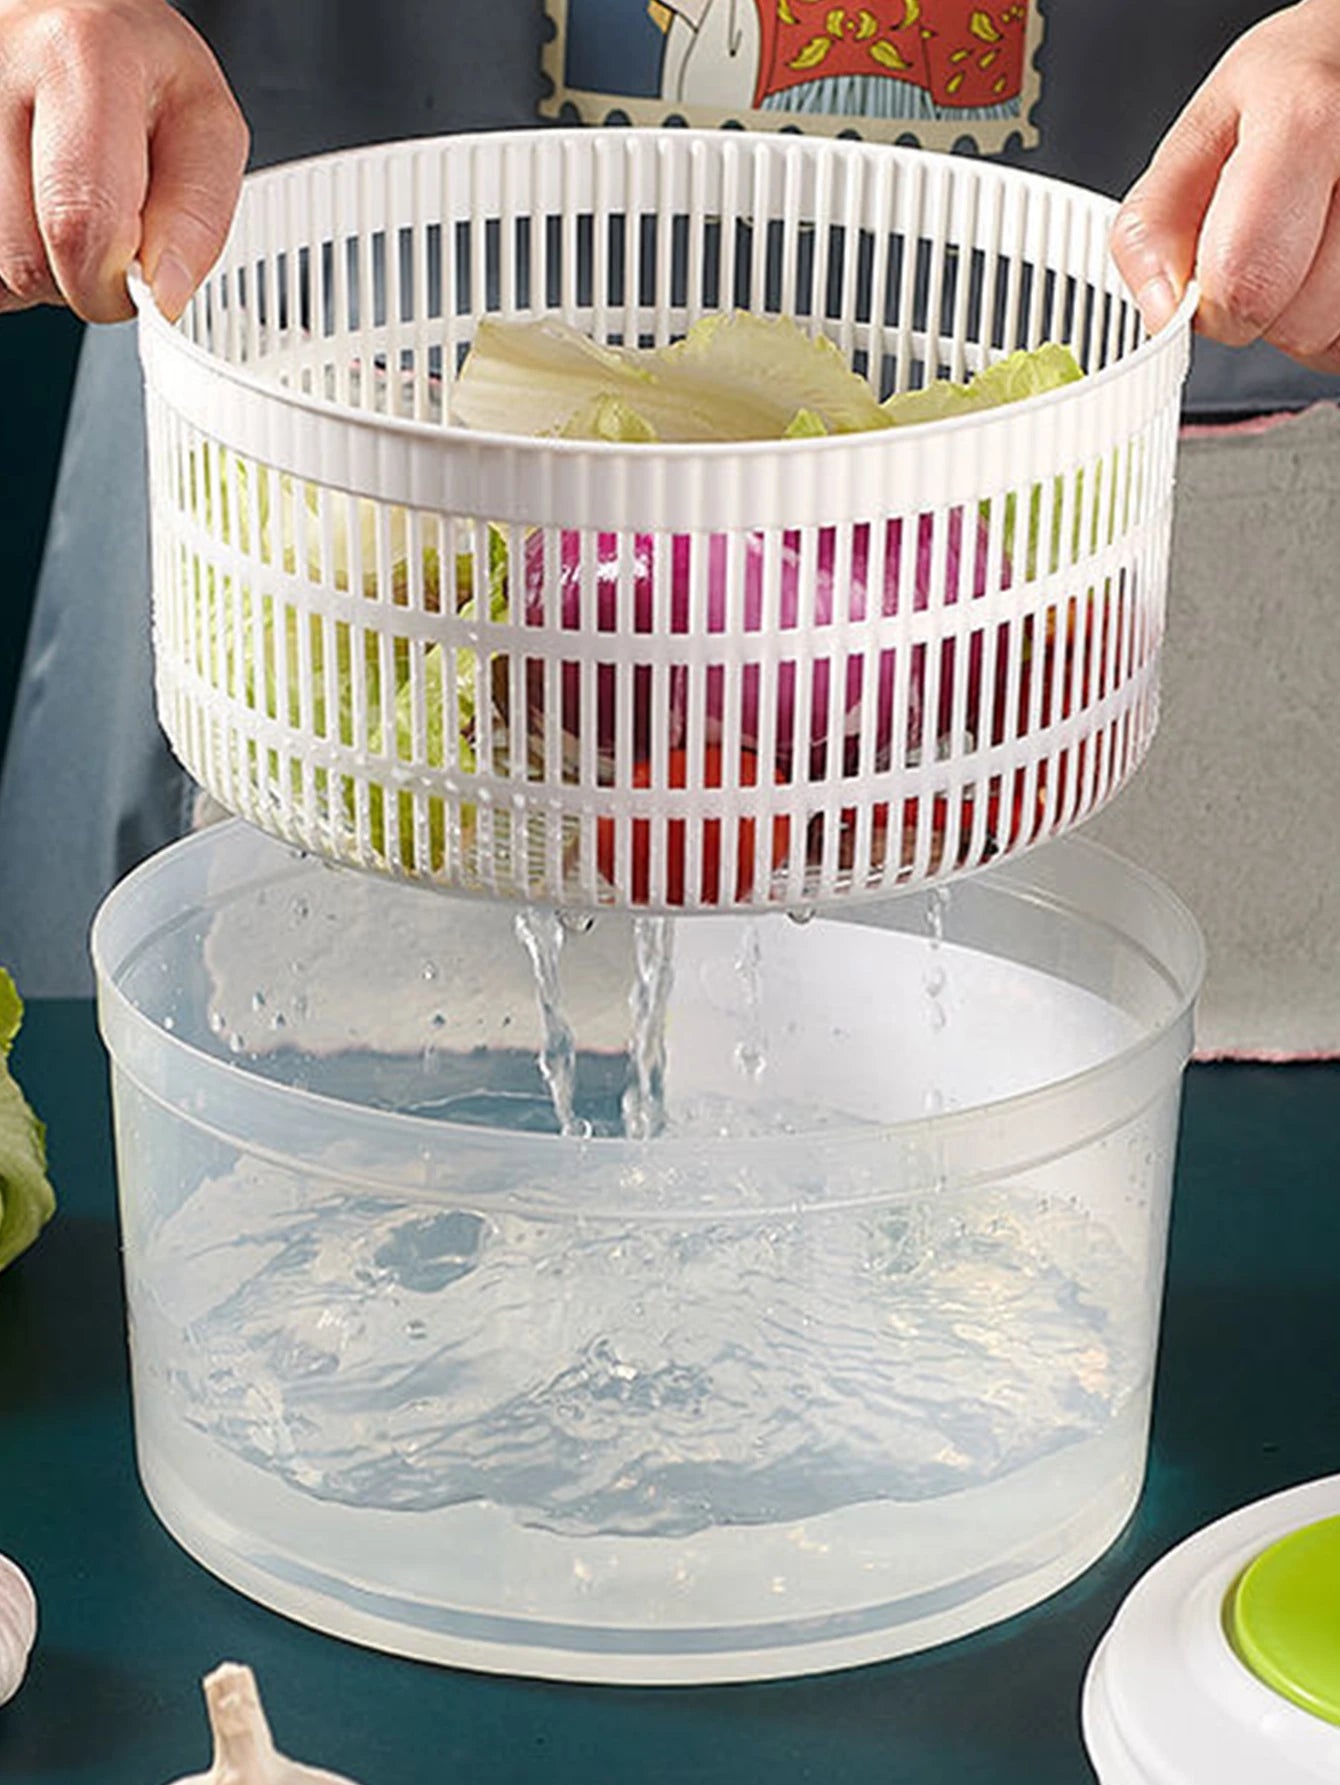 Household Vegetable Dehydrator Creative Manual Water Salad Spinner Fruit Drain Basket Dryer Hand Crank Kitchen Household Gadget